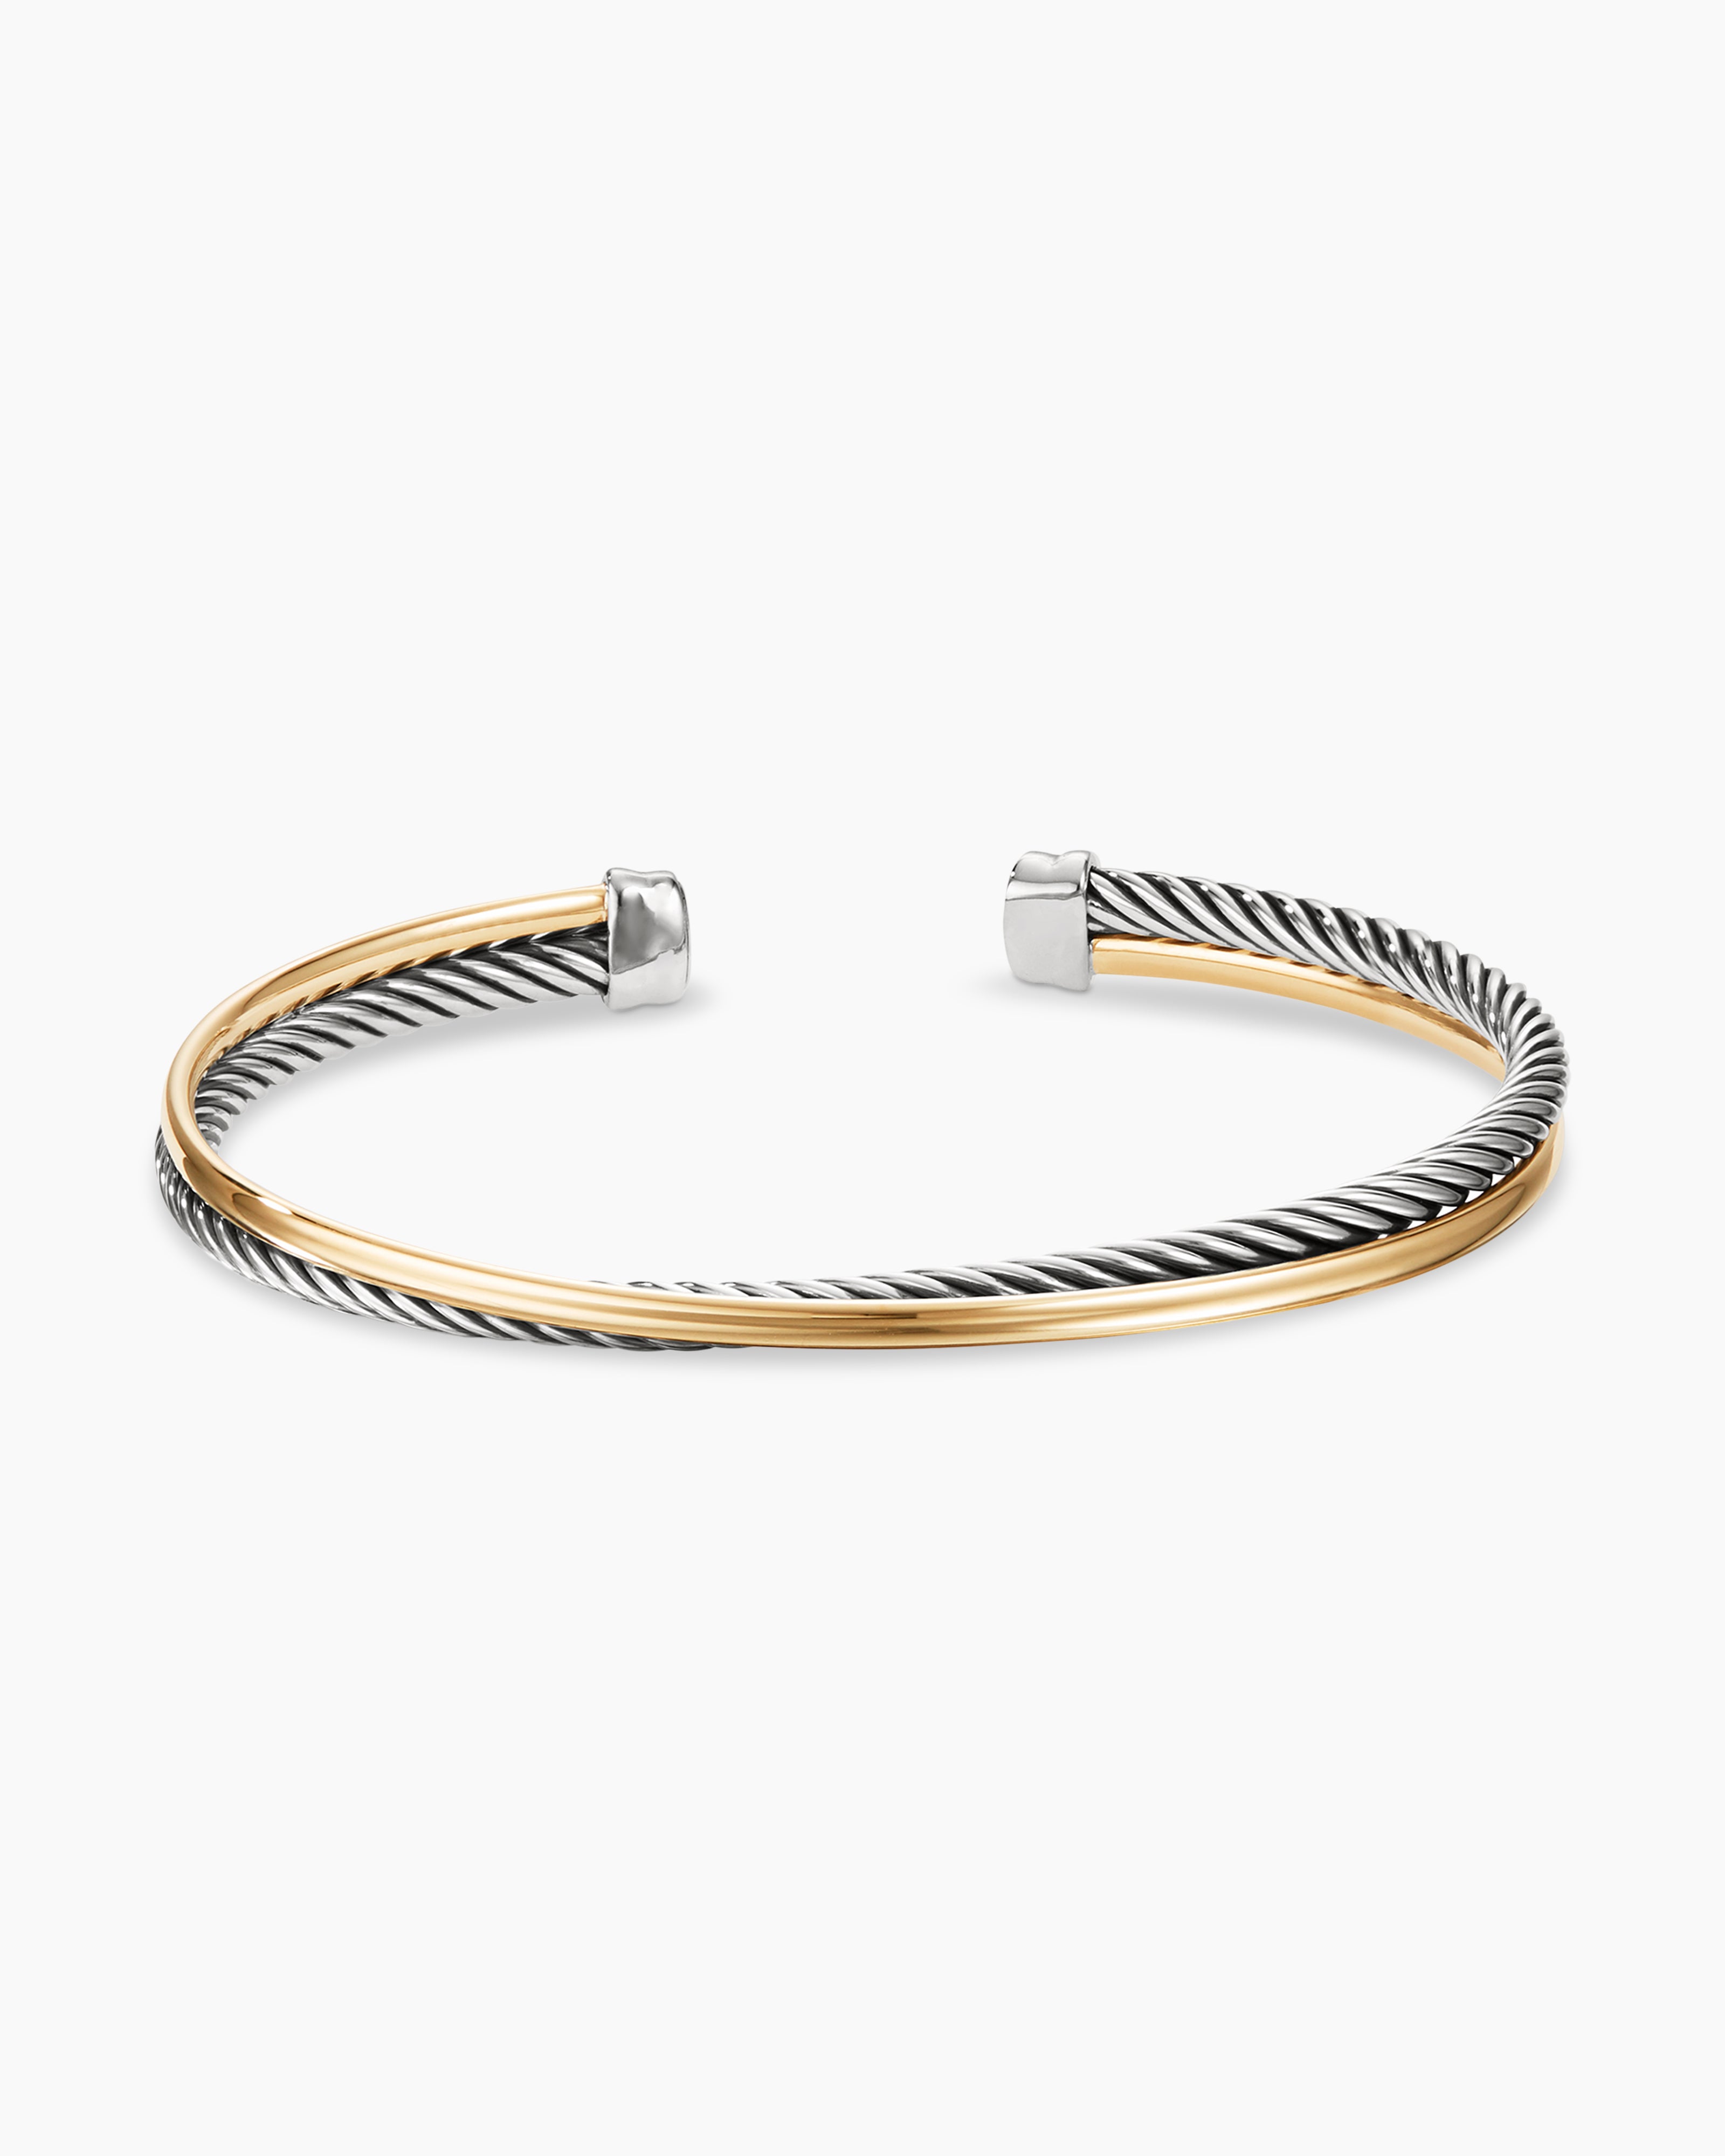 David Yurman Crossover Cuff Bracelet with Gold